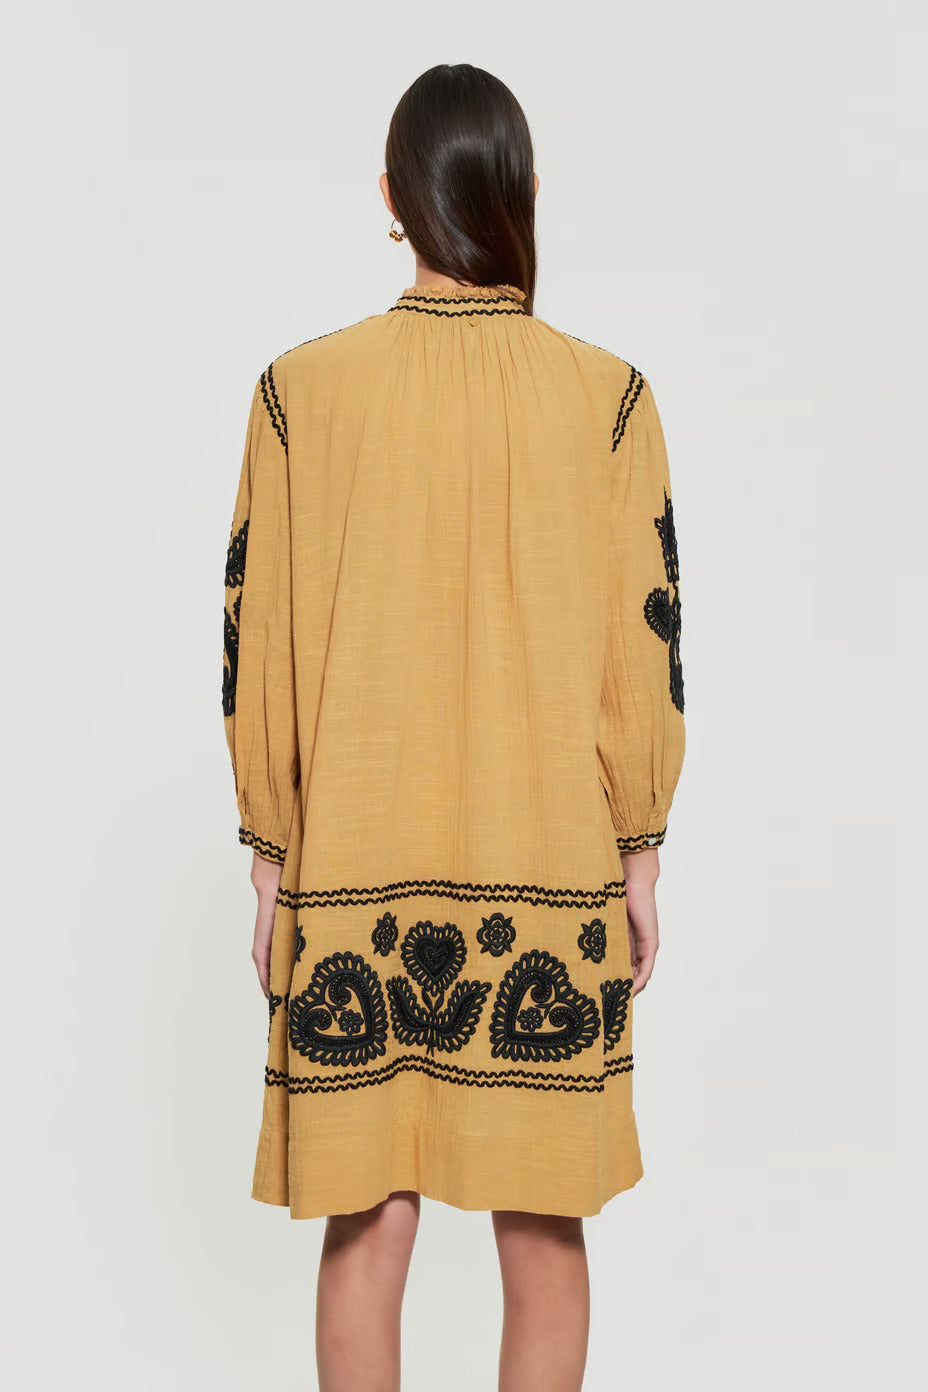 ANTIK BATIK _ Savoir Faire Ethical Artisan Made Fashion _ Boho Style Hungarian Hand Embroidered Knee Length Cotton Dress _ Black Stitching on Camel Cotton Crepe